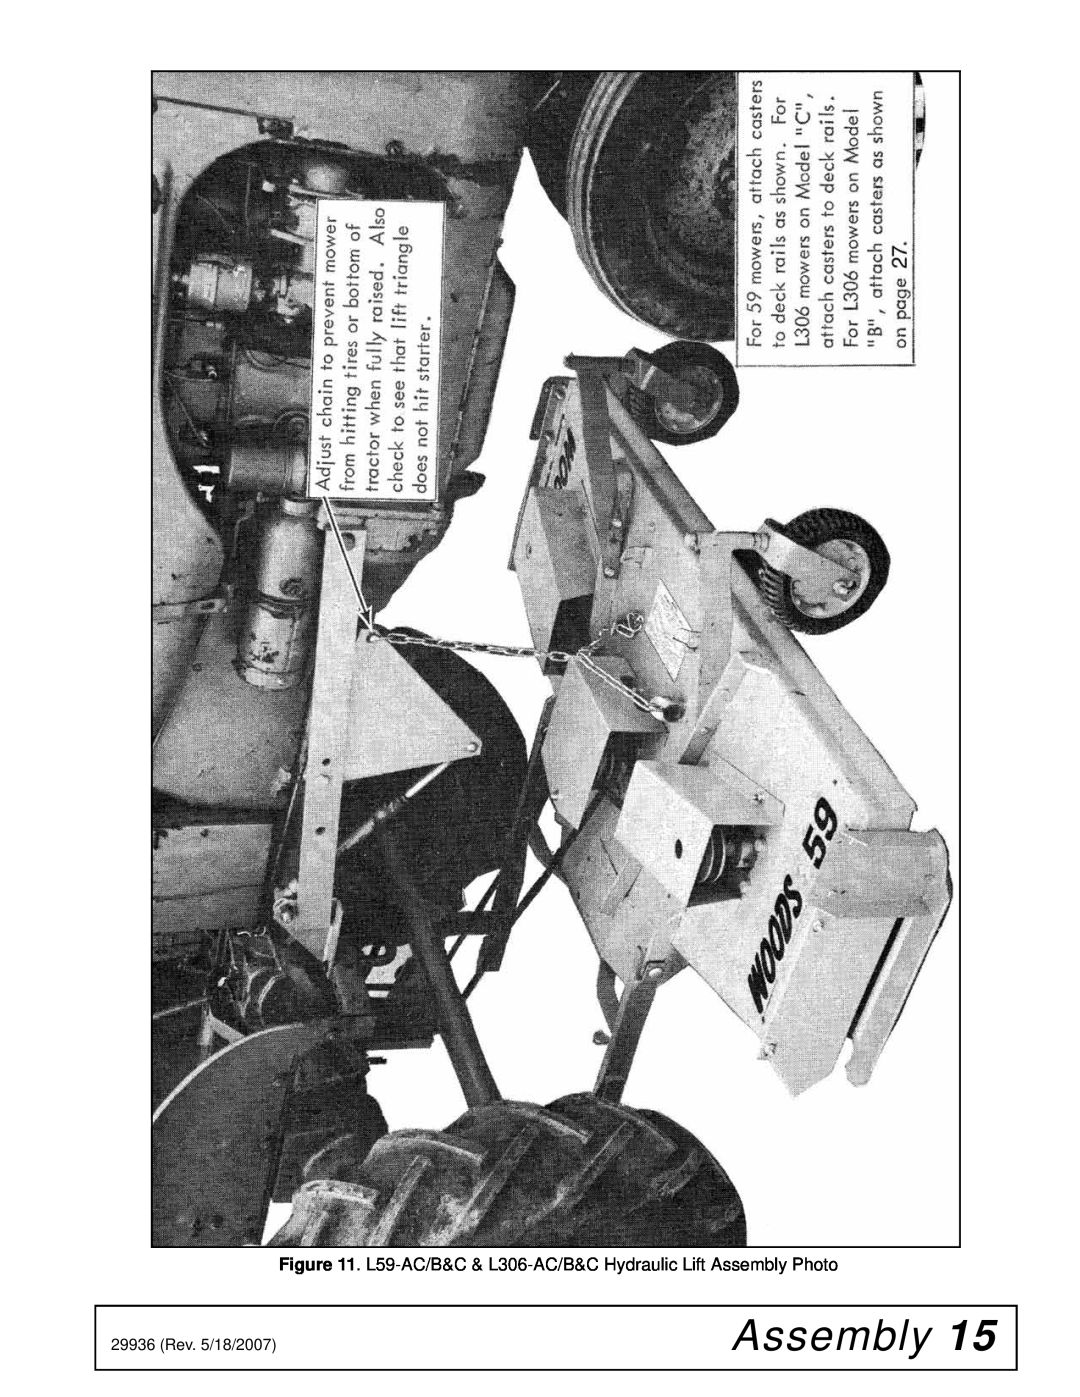 Woods Equipment L36 manual L59-AC/B&C & L306-AC/B&C Hydraulic Lift Assembly Photo 